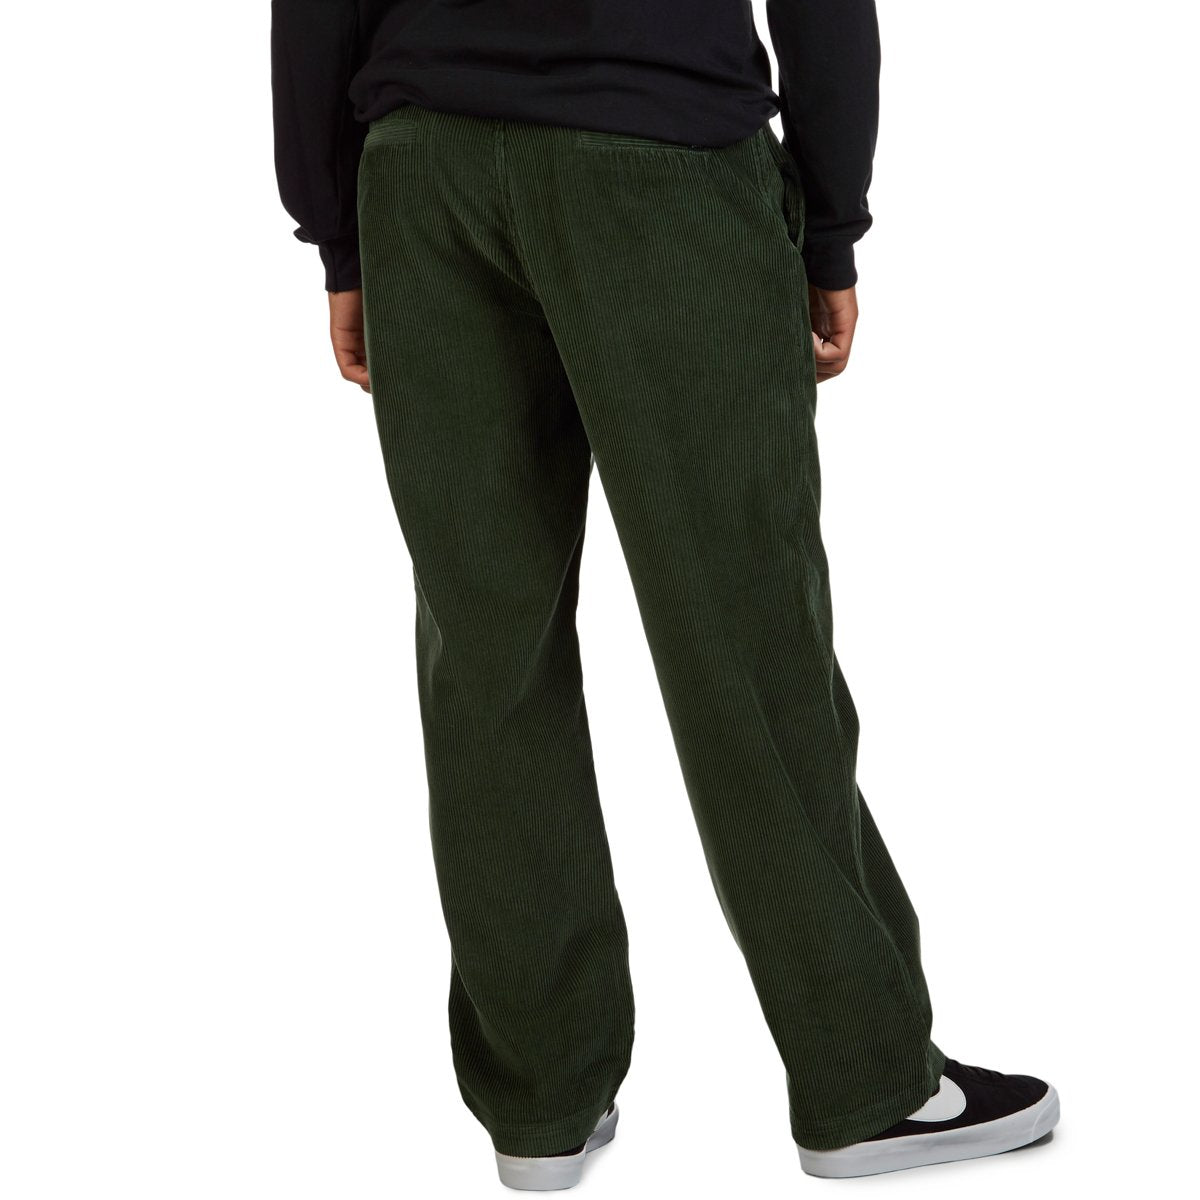 CCS Original Relaxed Corduroy Pants - Green image 3